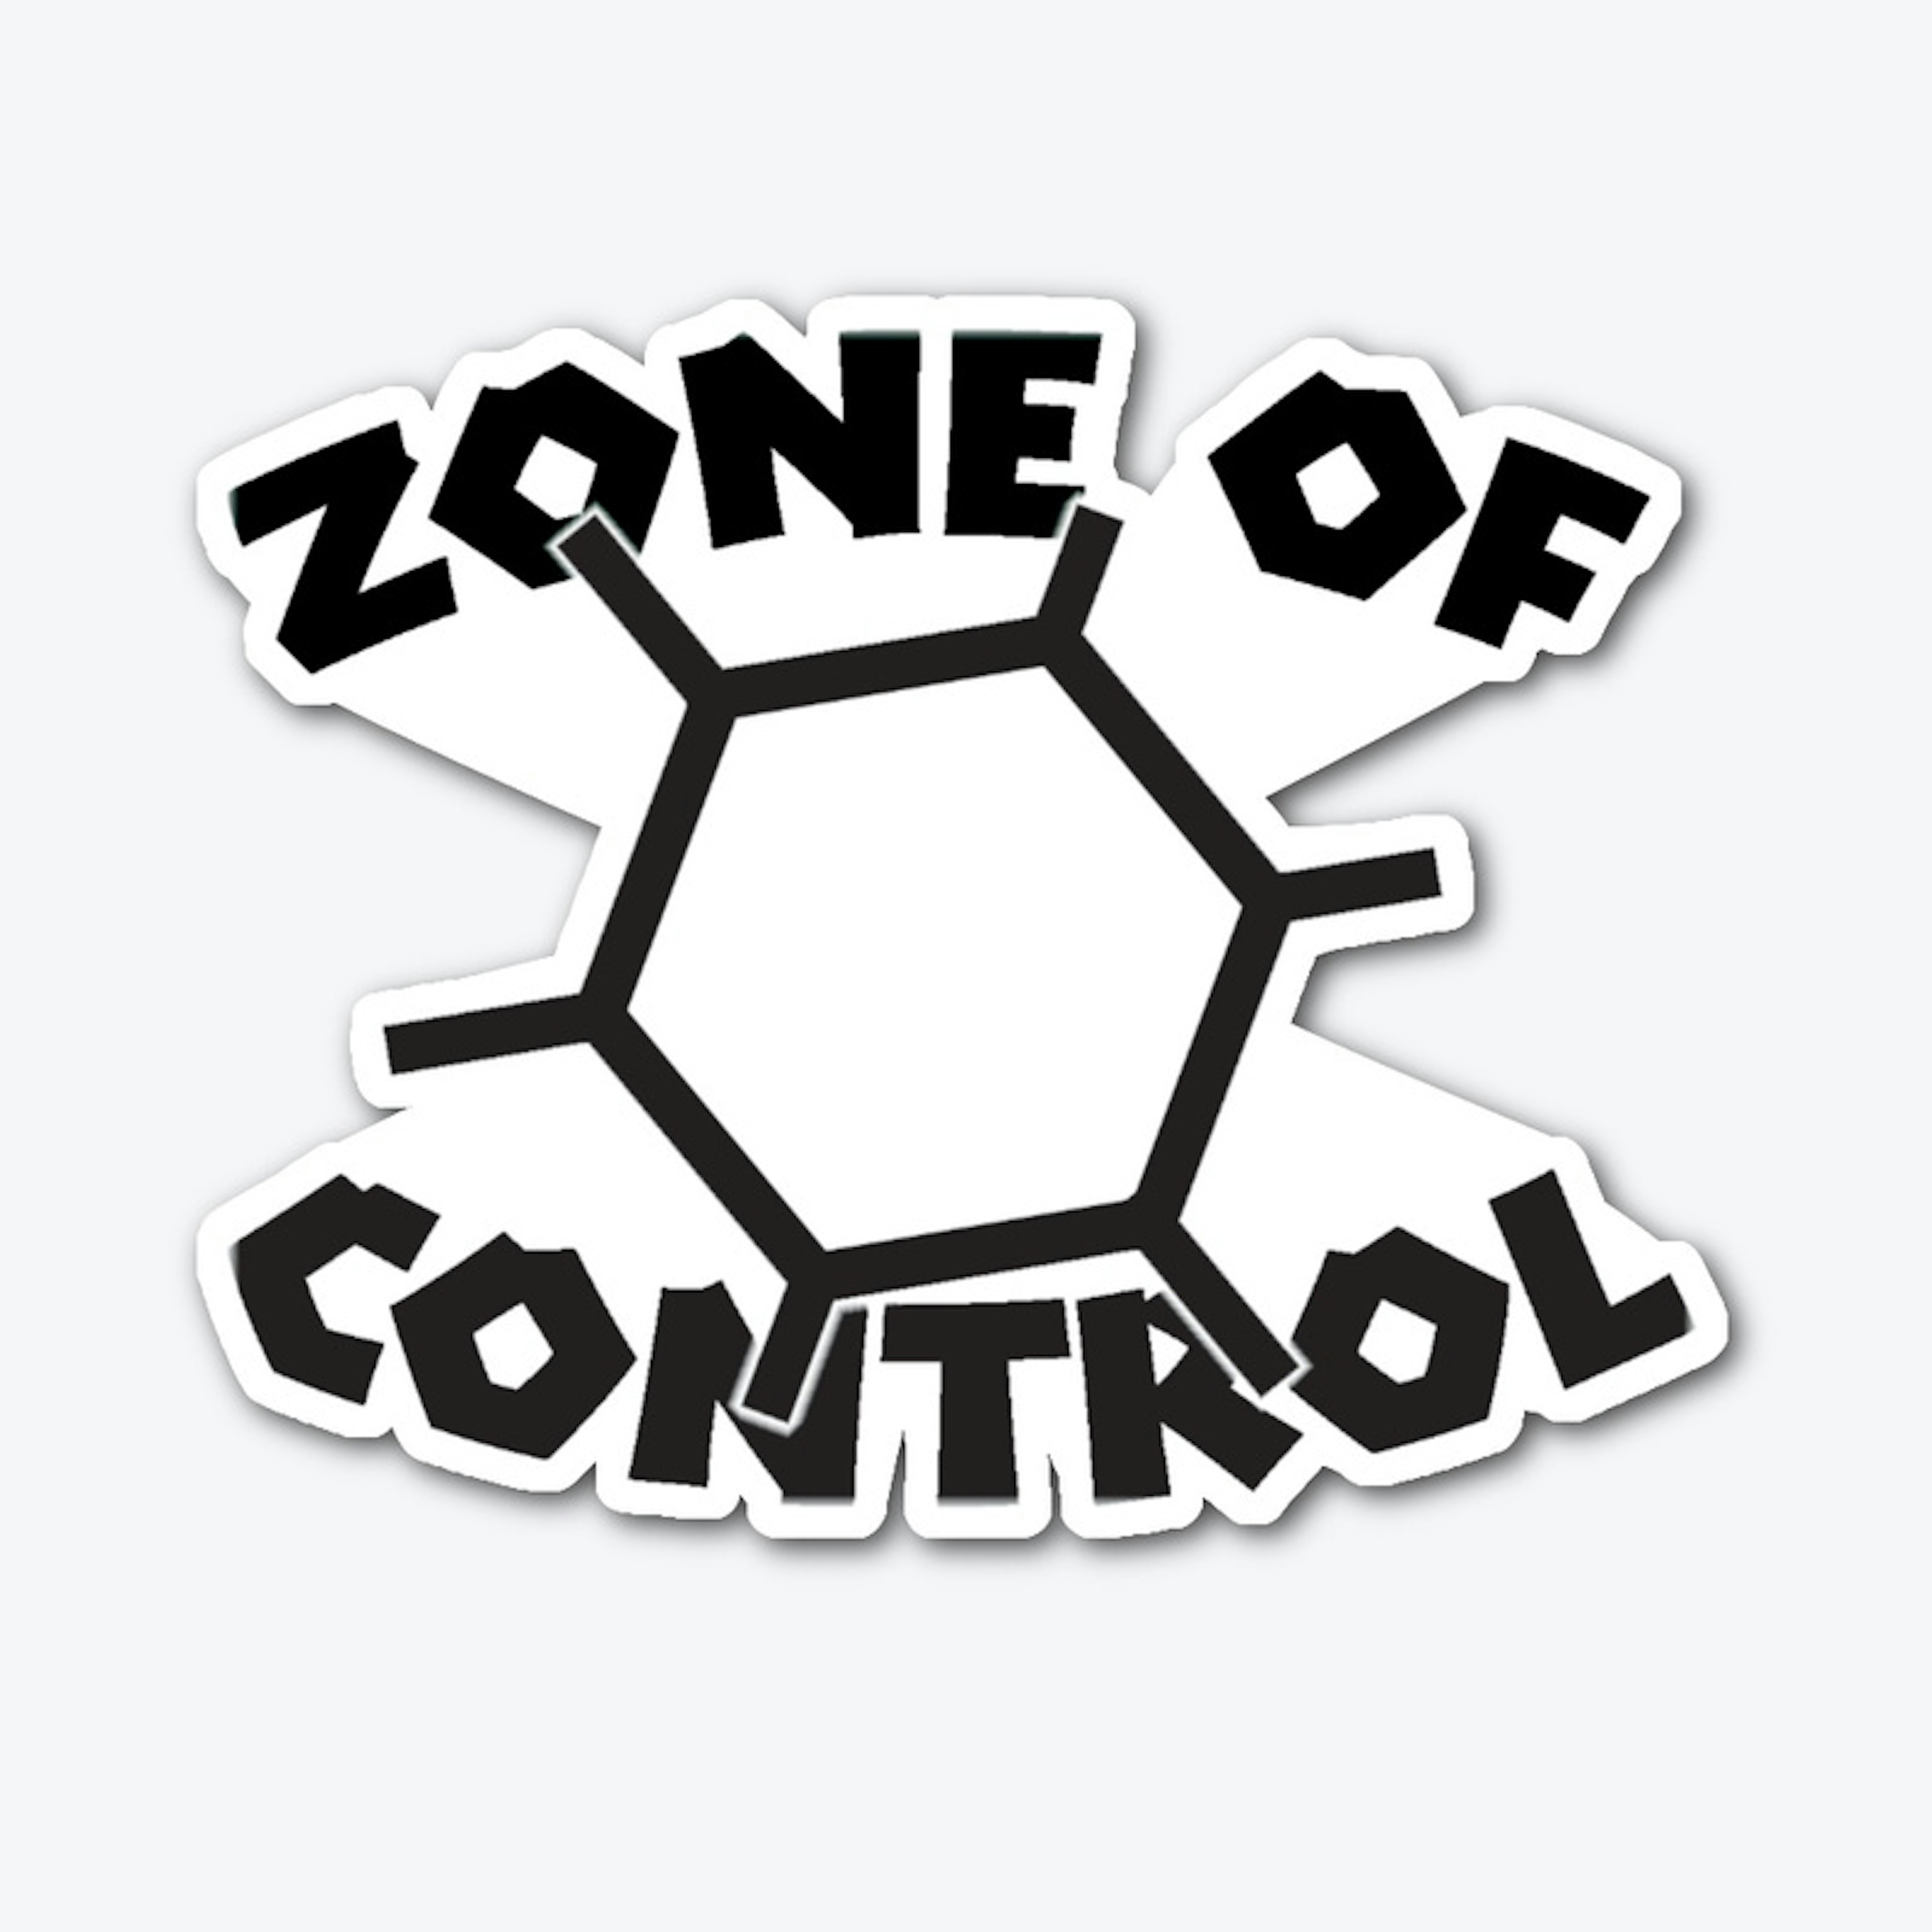 Zone of Control